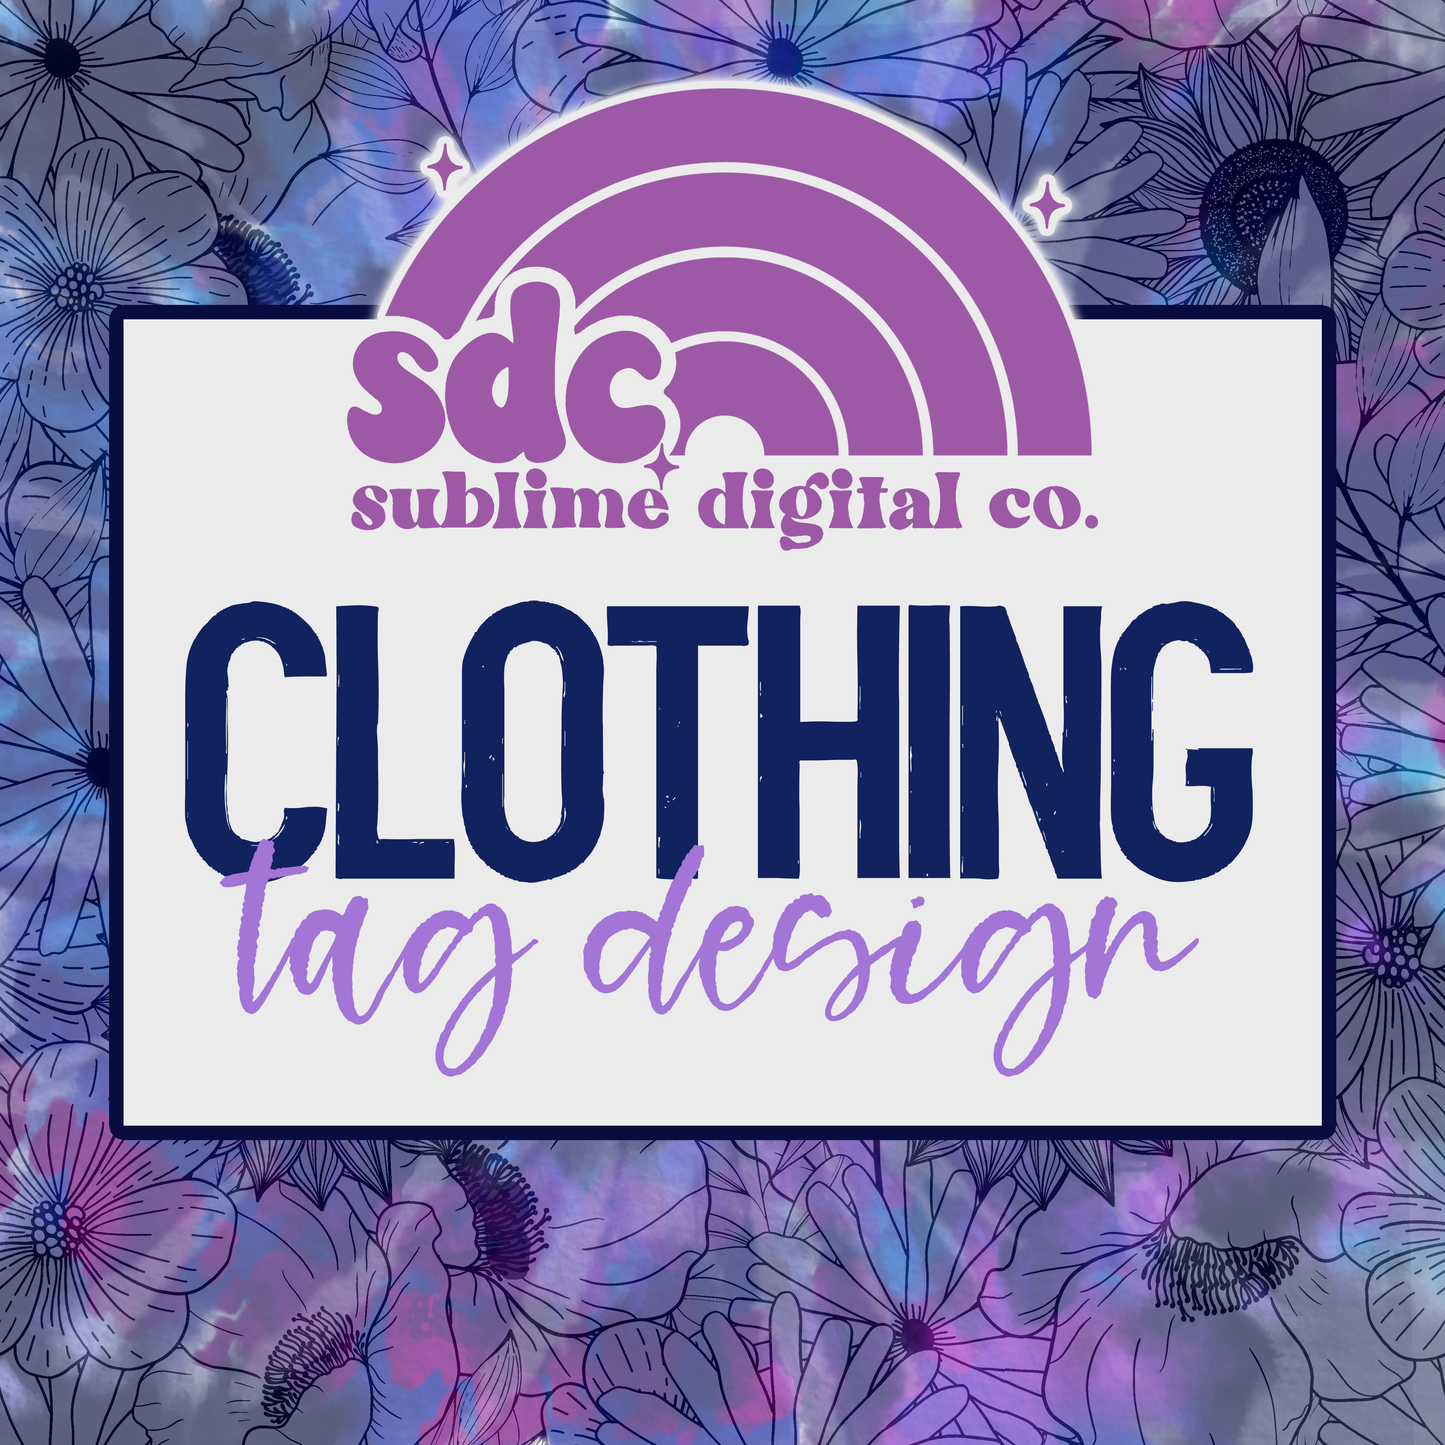 Clothing Tag Design • Business Branding • Custom Digital Designs